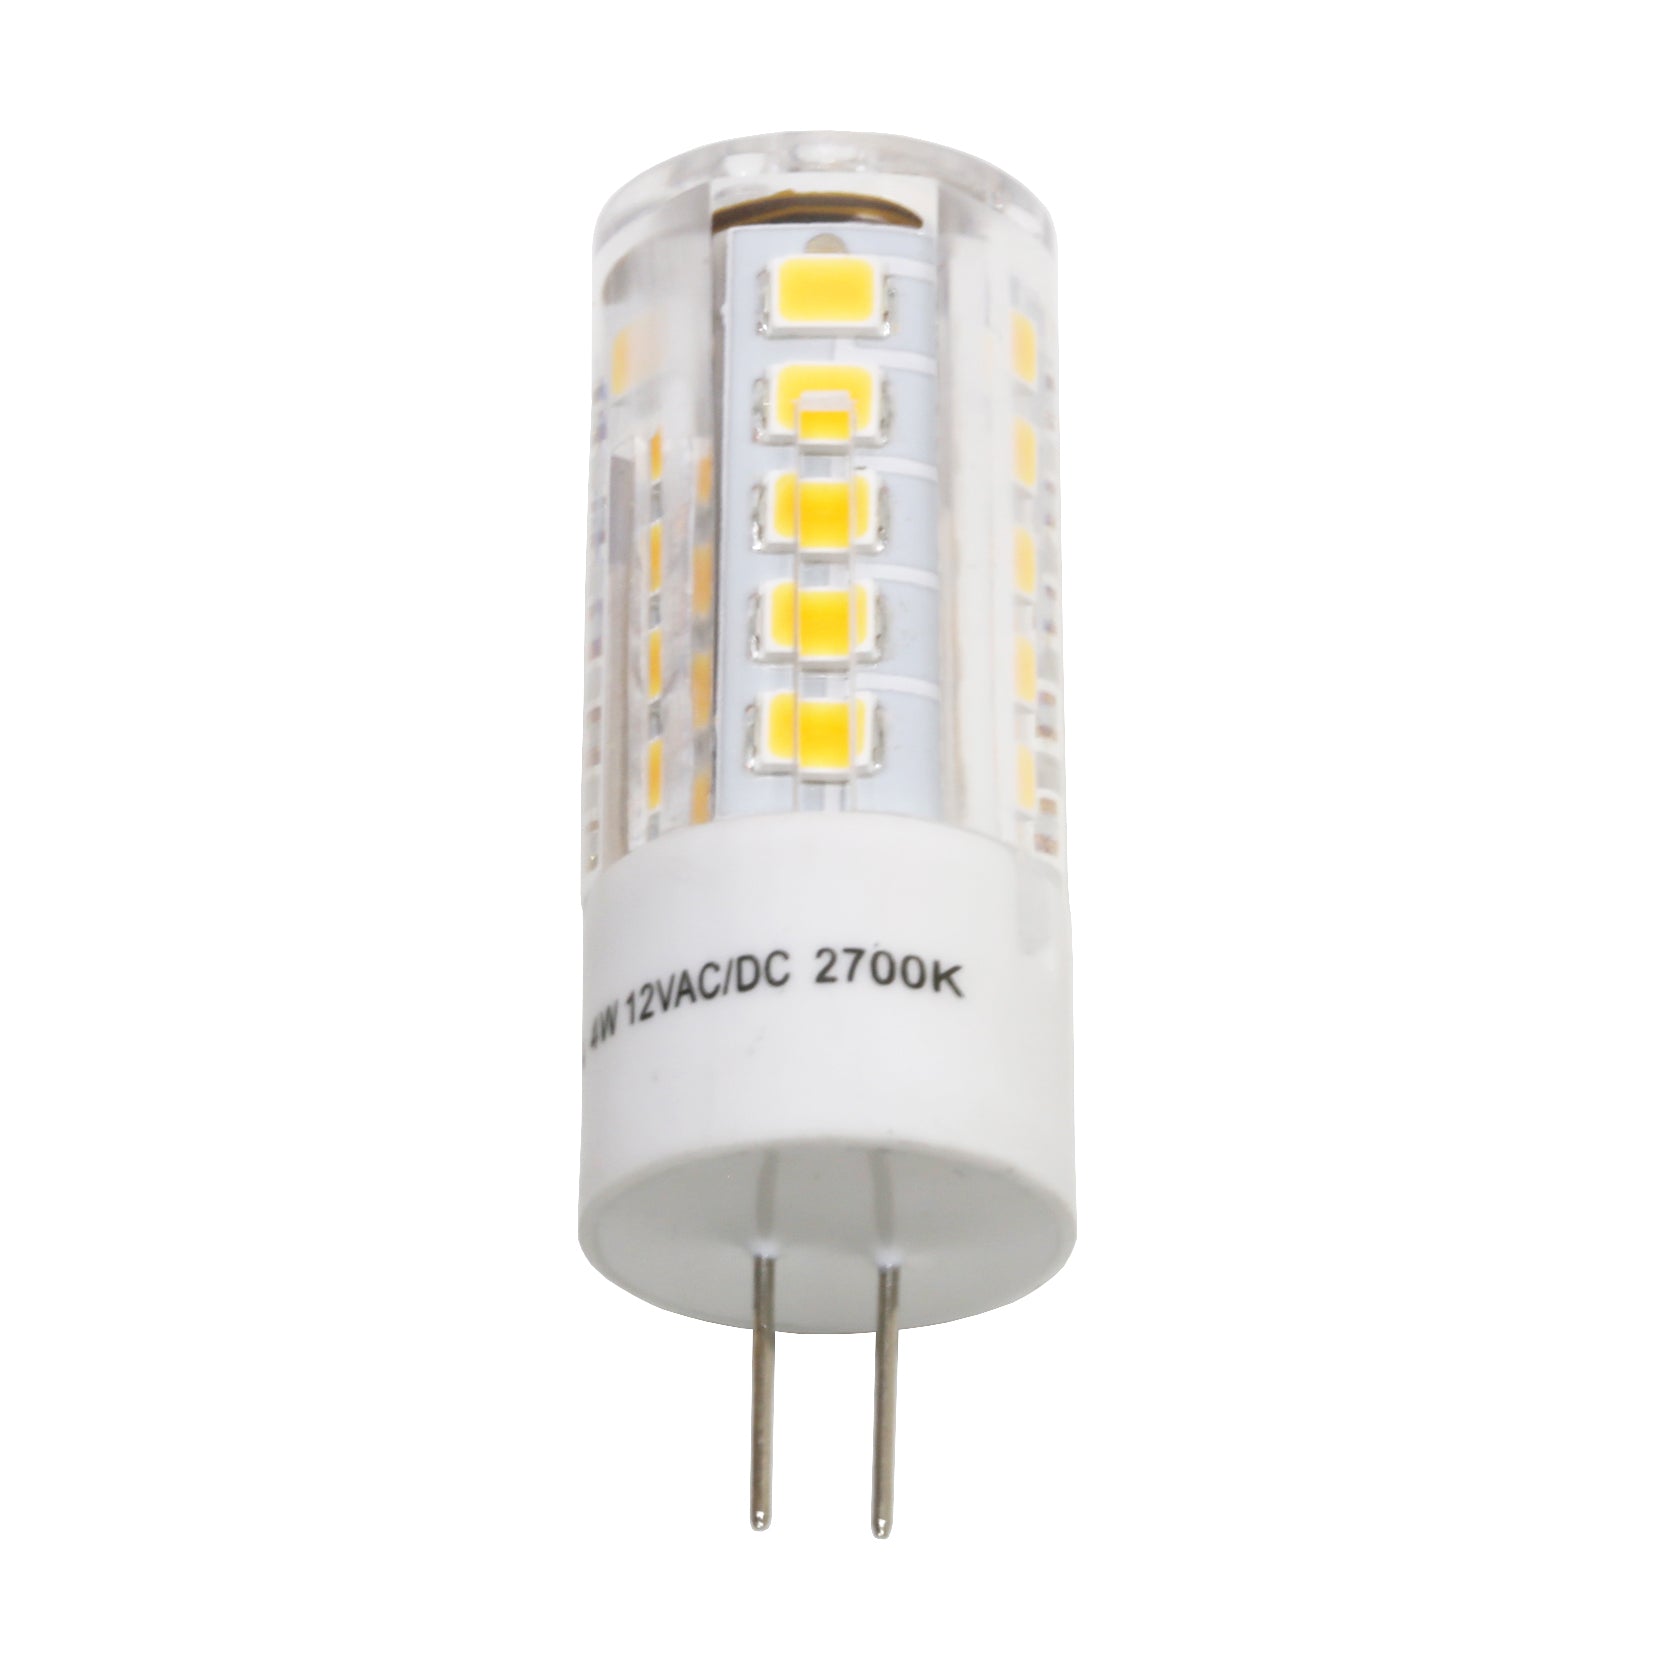 G4 Warm White (2700K) LED Flood Light Bulb for Low Voltage Landscape Path &amp; Area Lighting - 25 Watt Equivalent